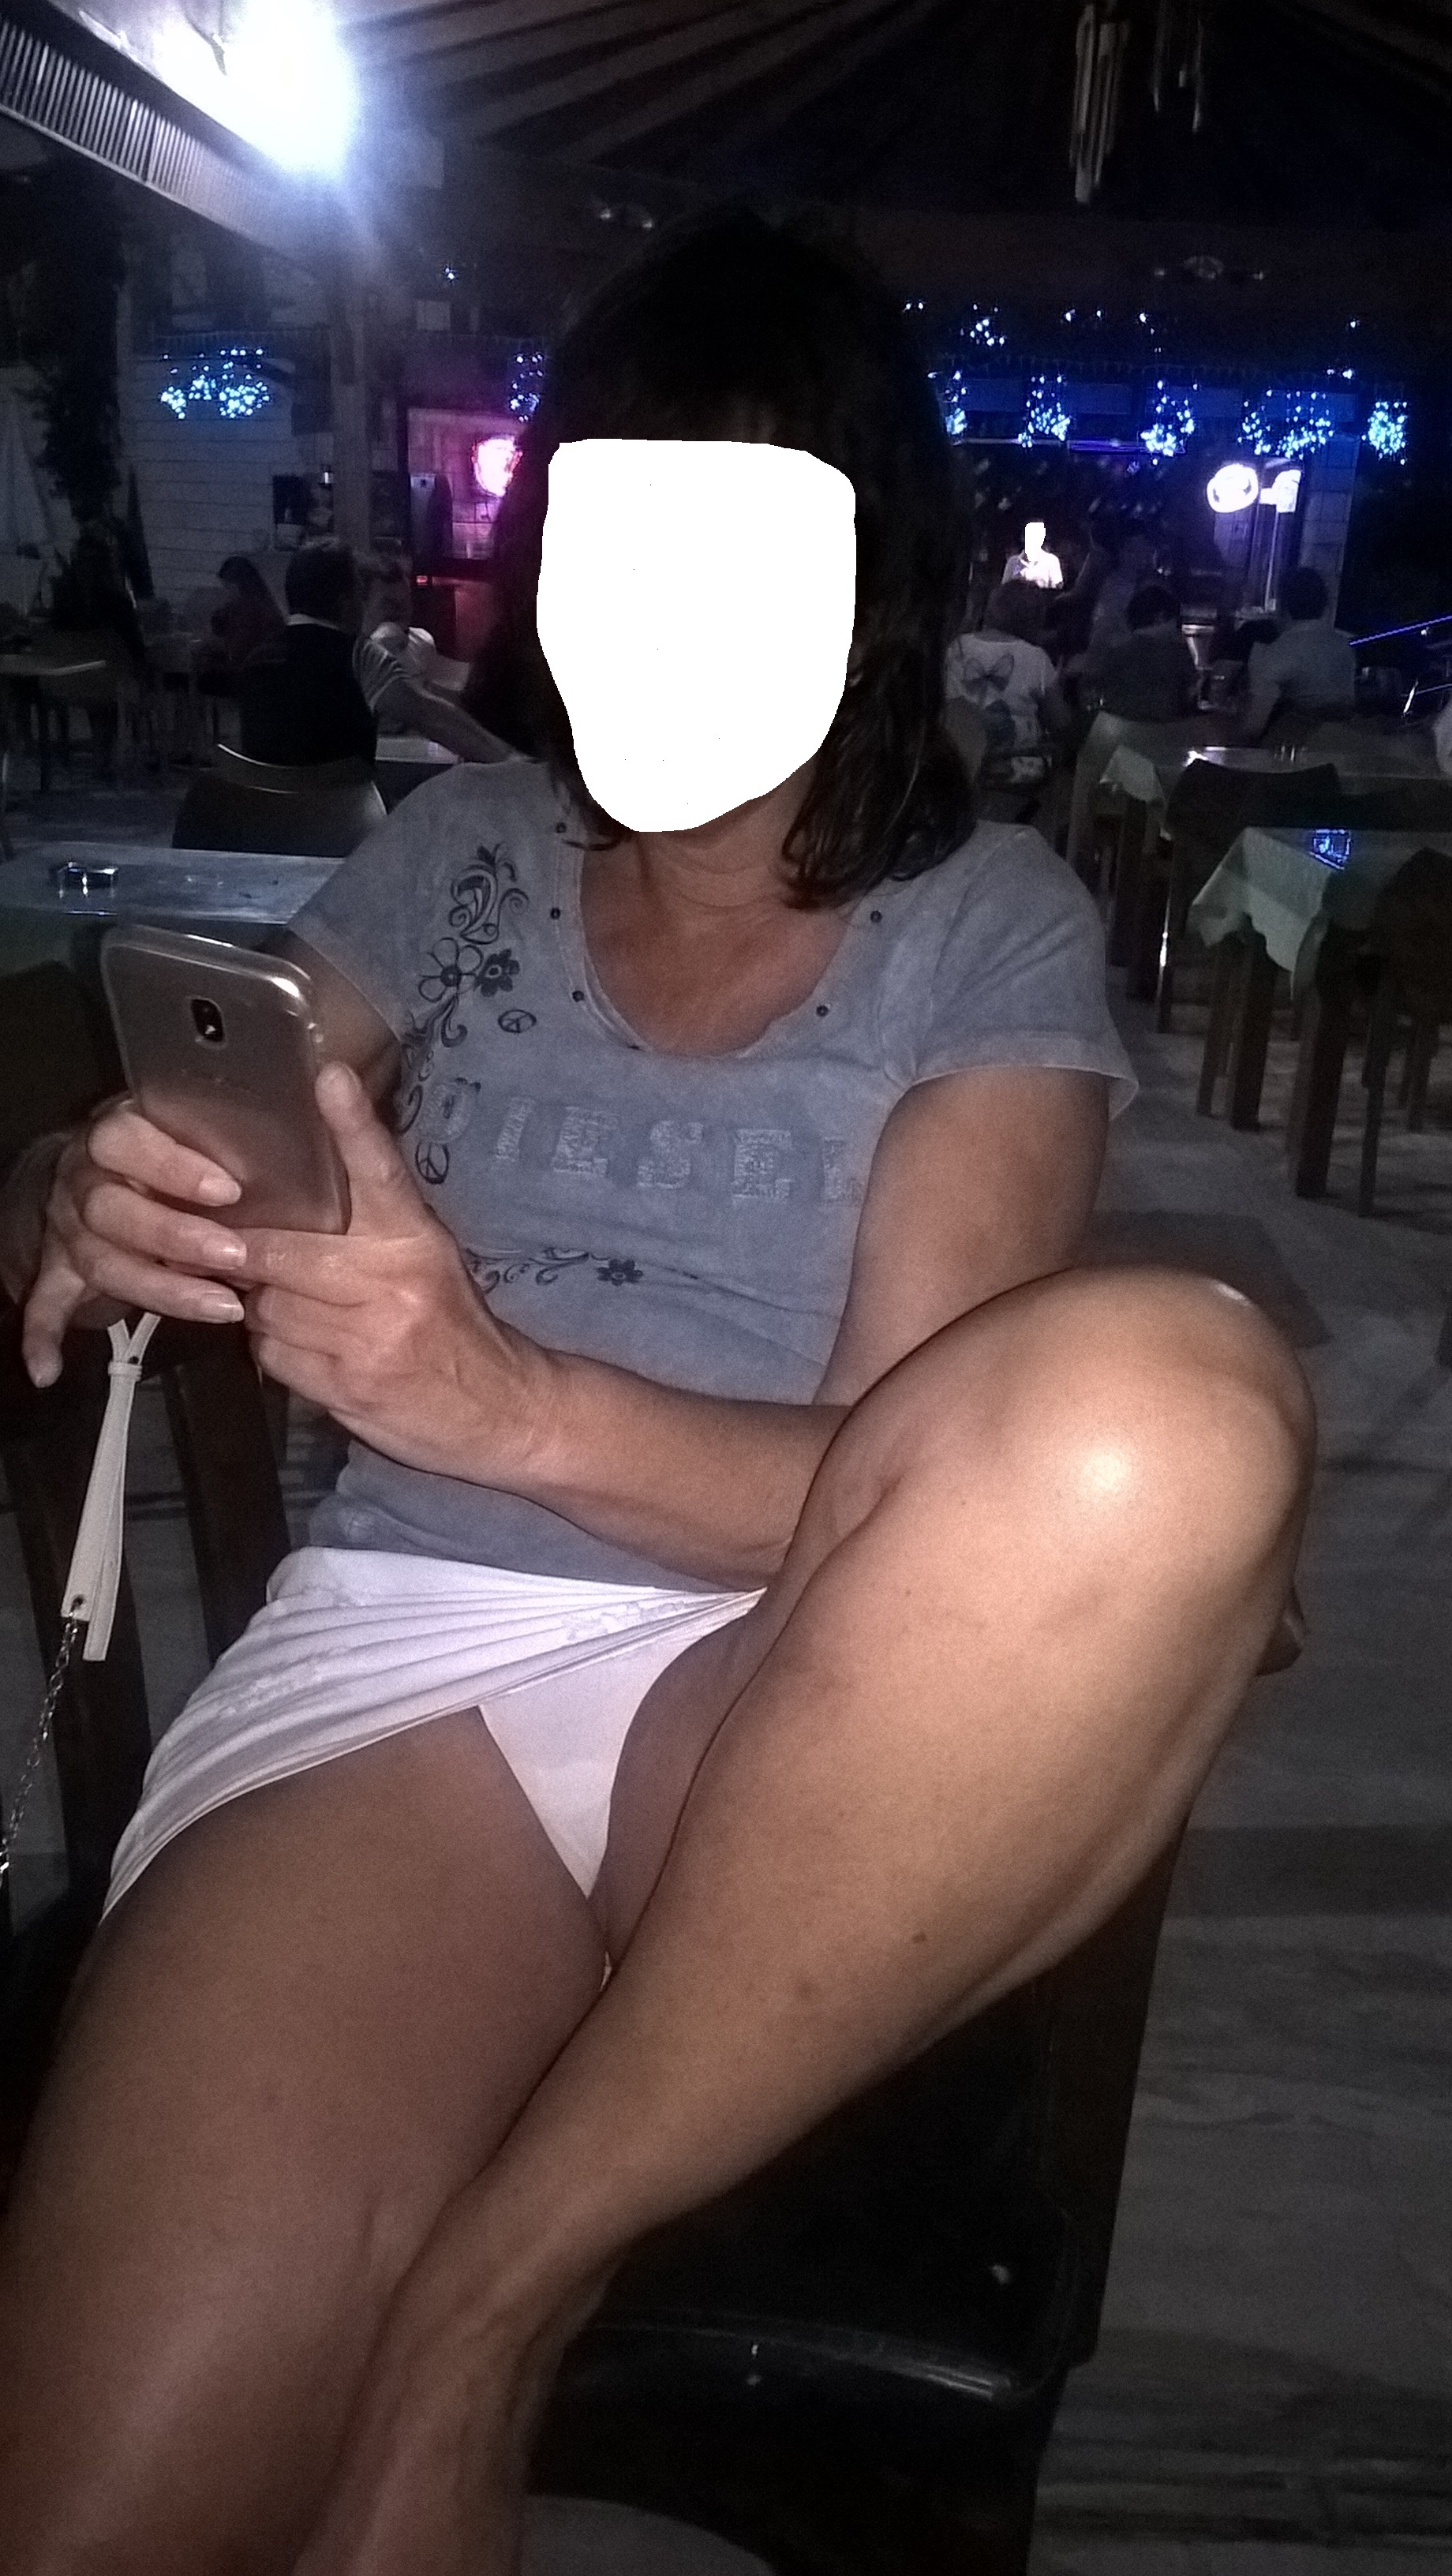 wife upskirt in bar